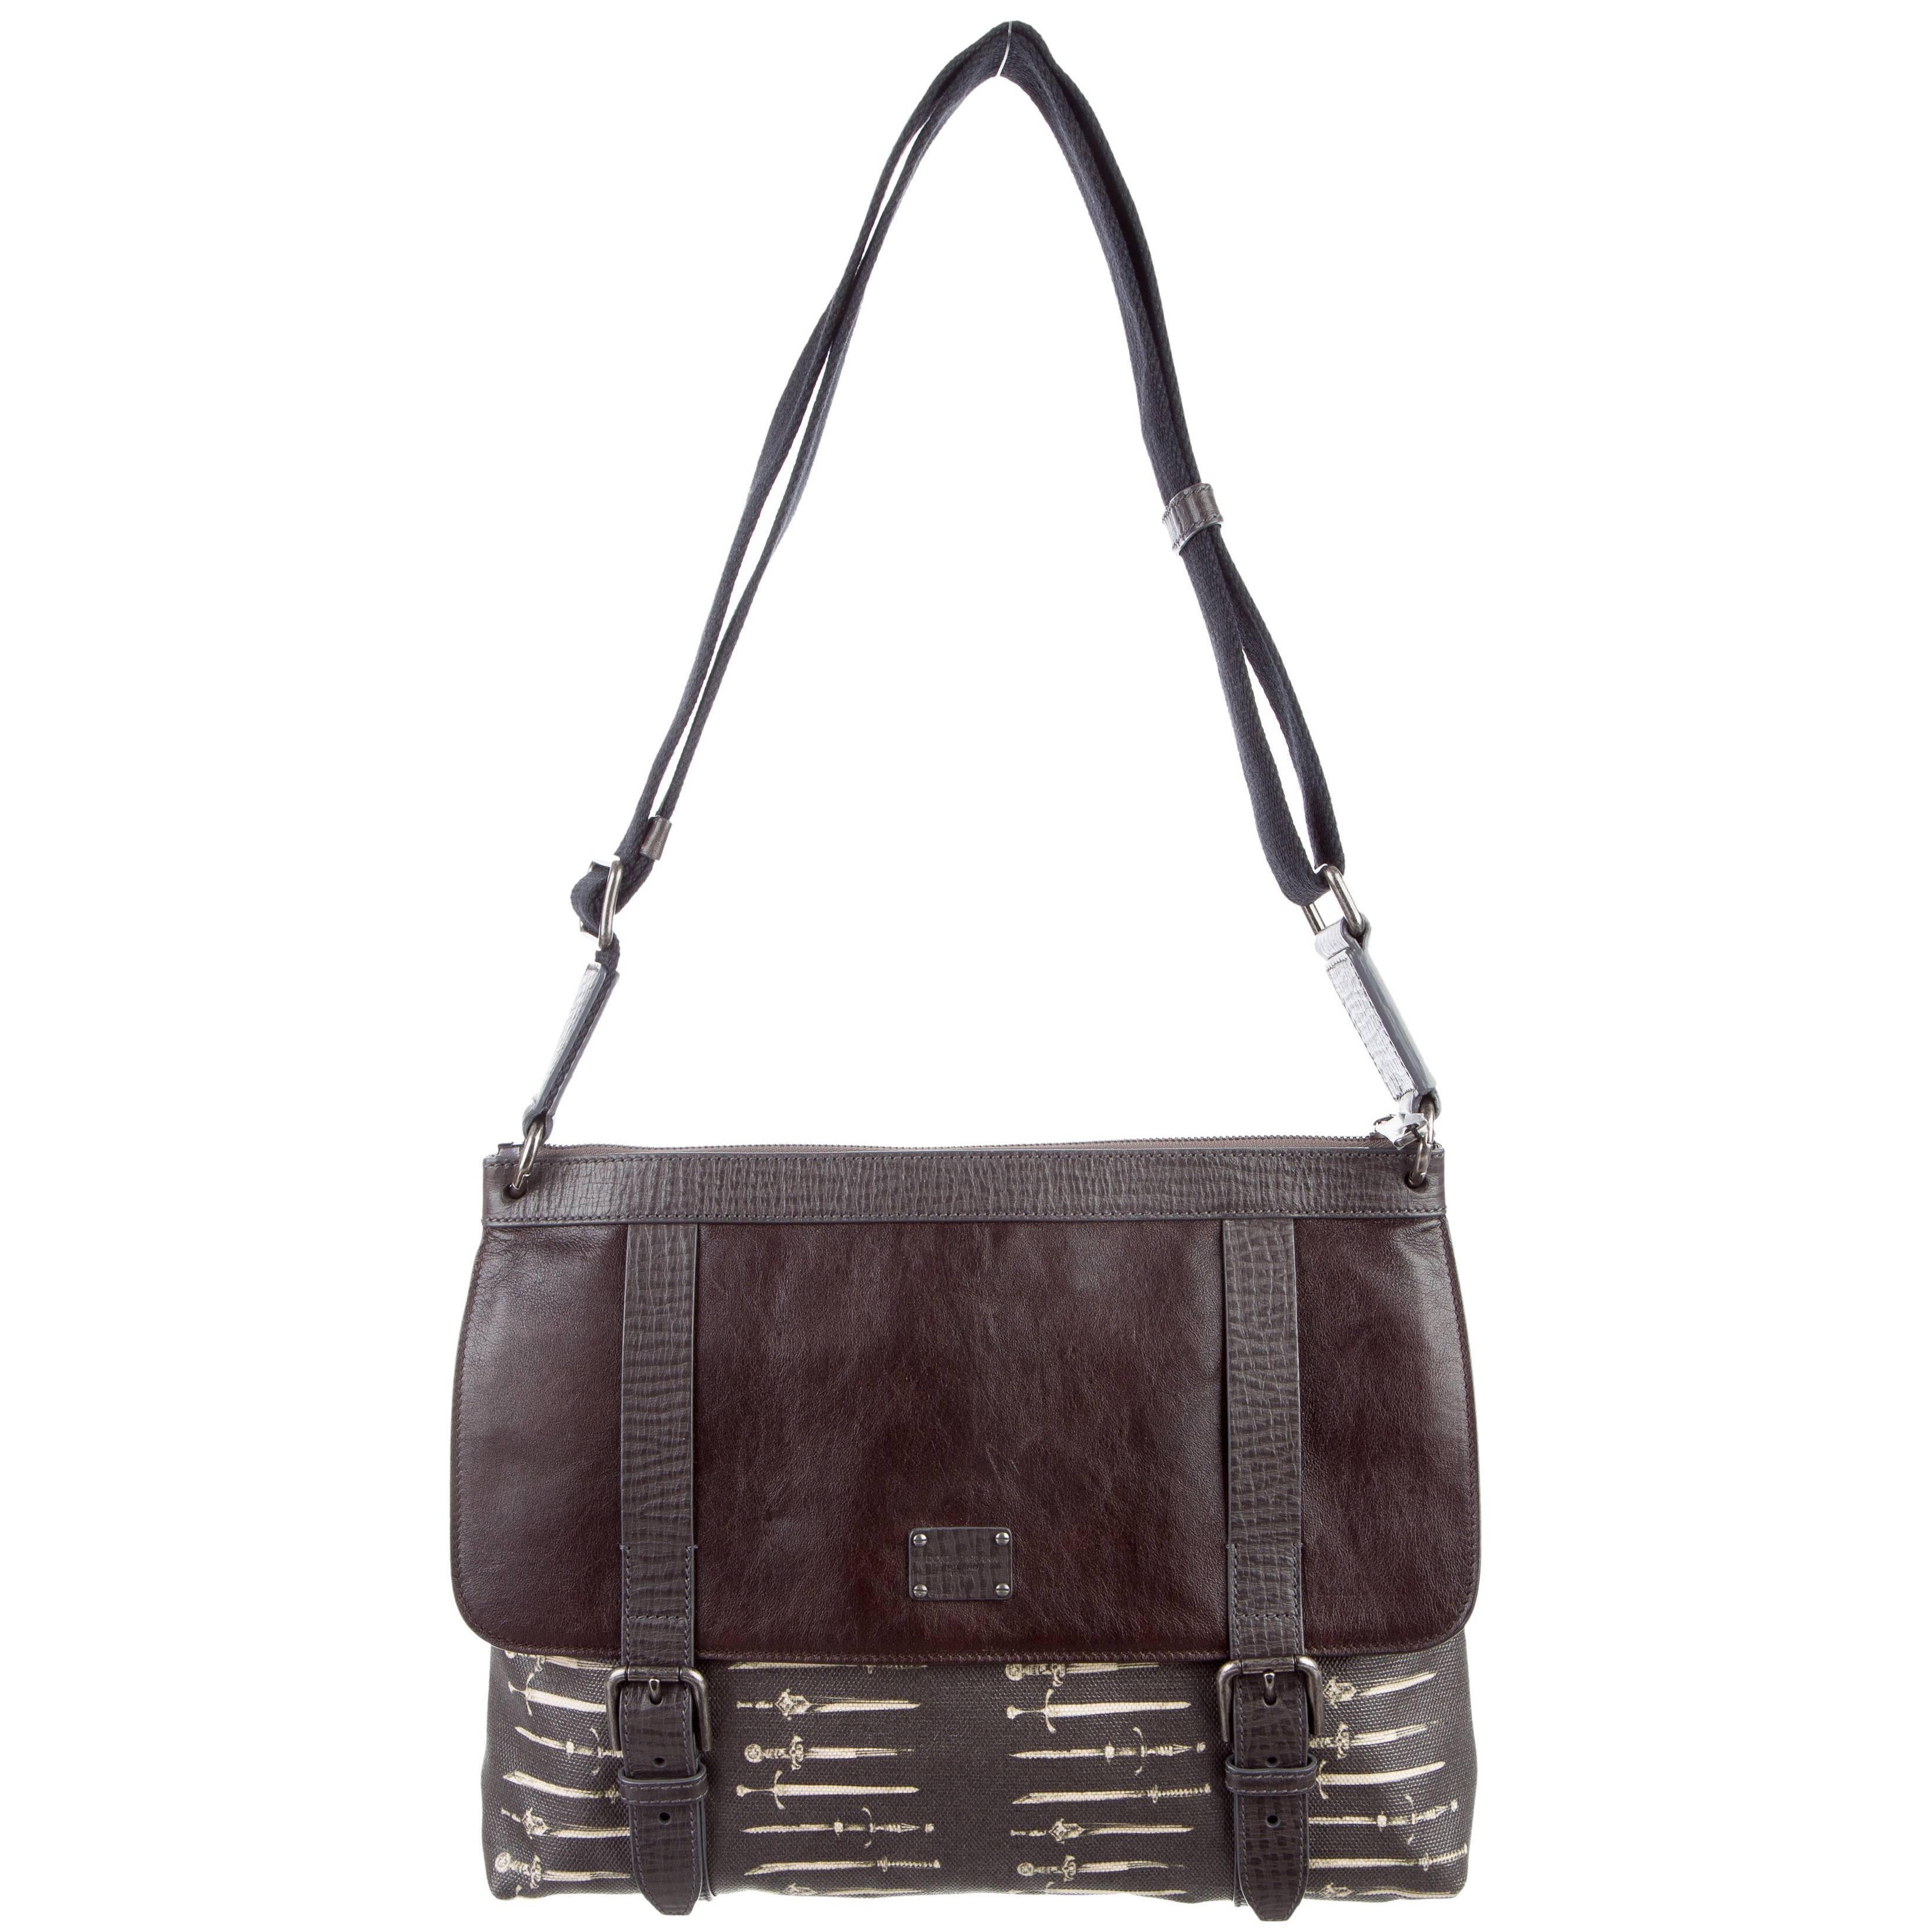 Dolce & Gabbana New Brown Leather Canvas Men's Carryall Travel Shoulder Bag